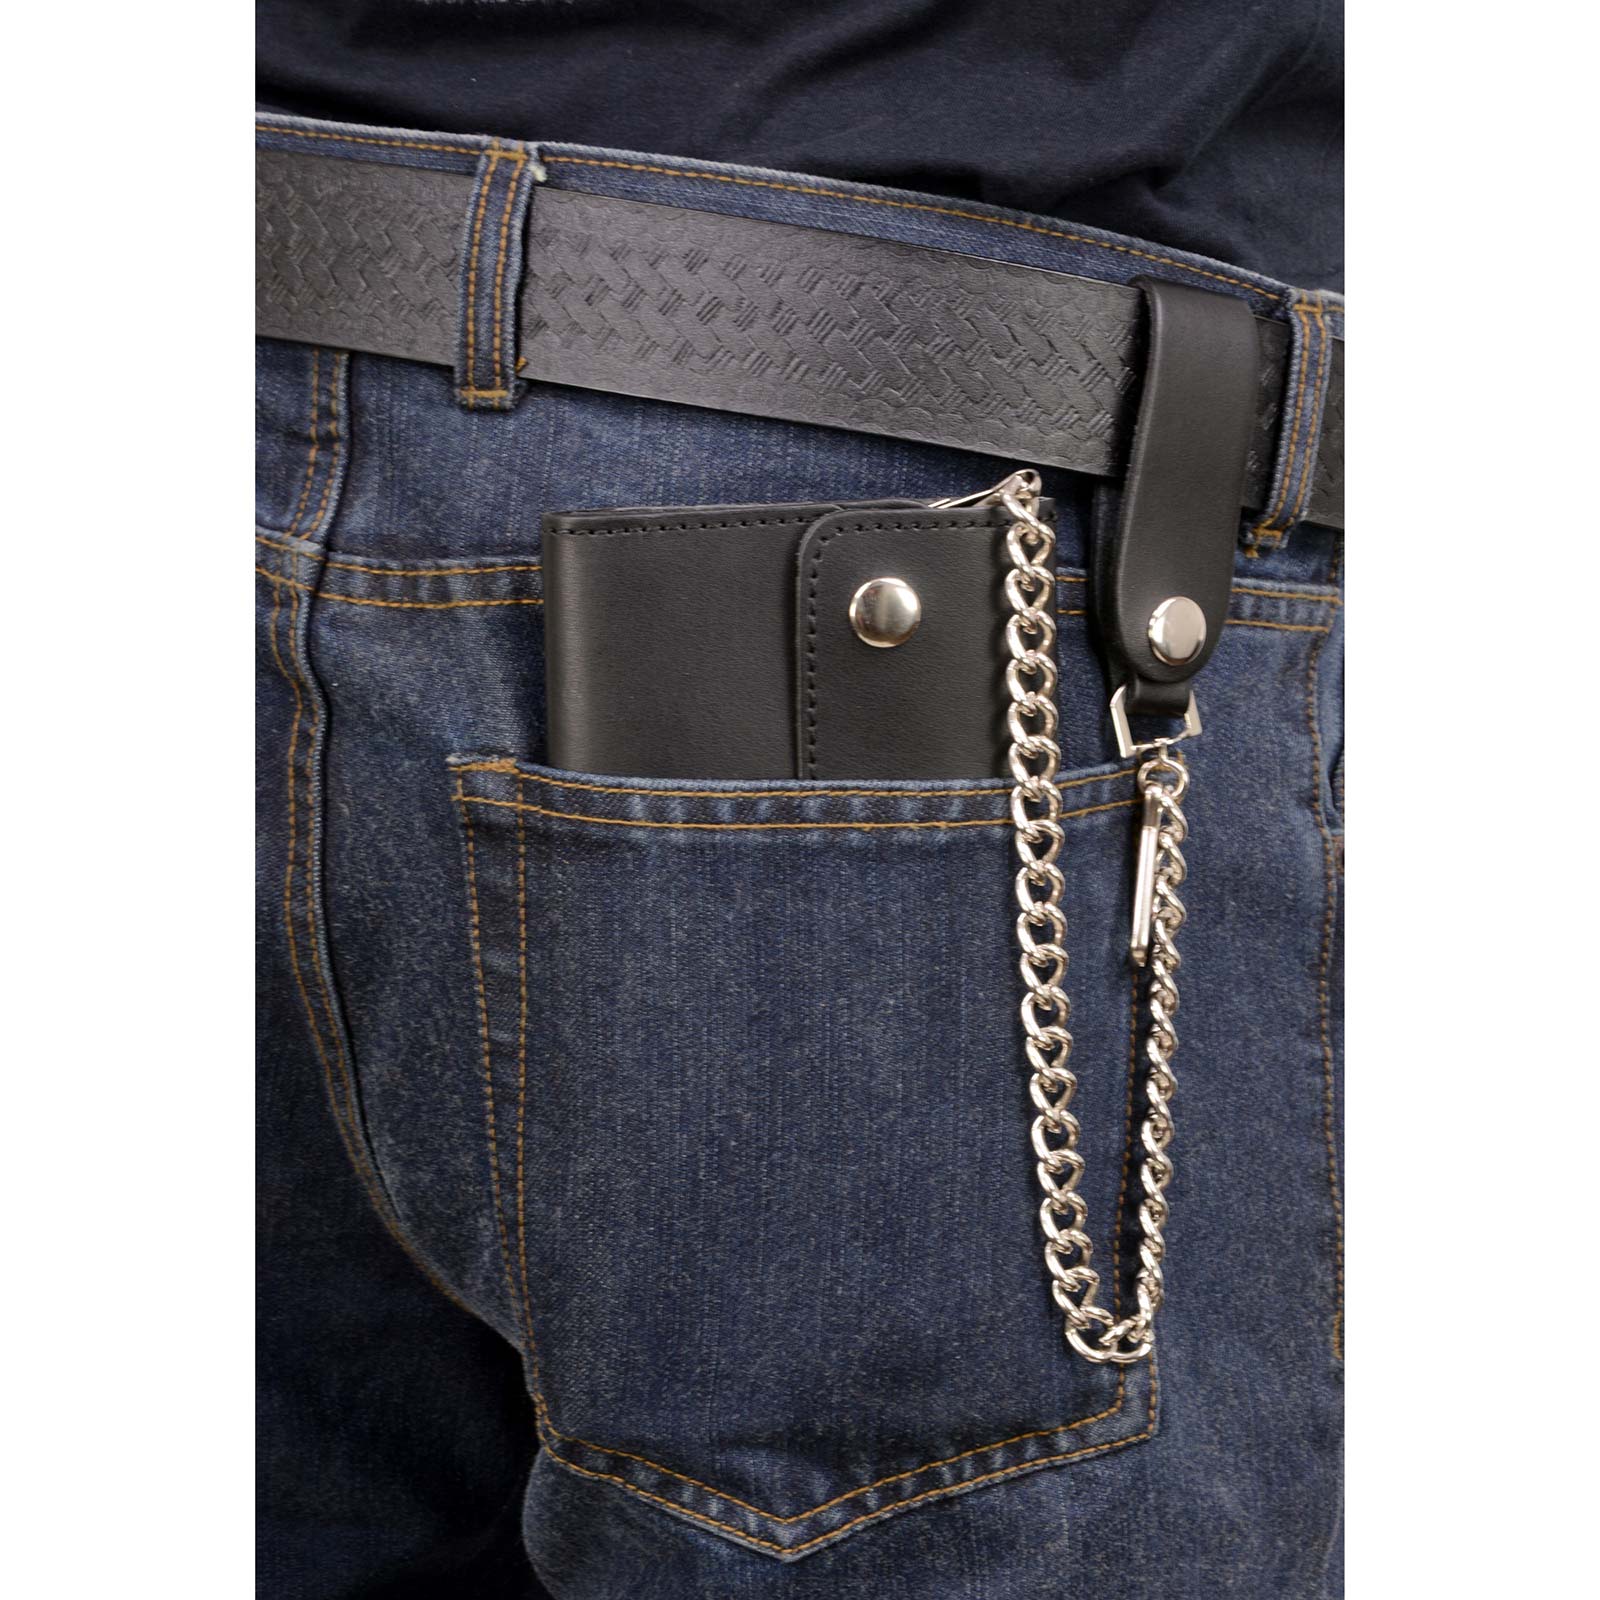 Milwaukee Leather MLW7811 Men's 8” Black Leather Biker Wallet - Bi-Fold w/ Anti-Theft Stainless Steel Chain